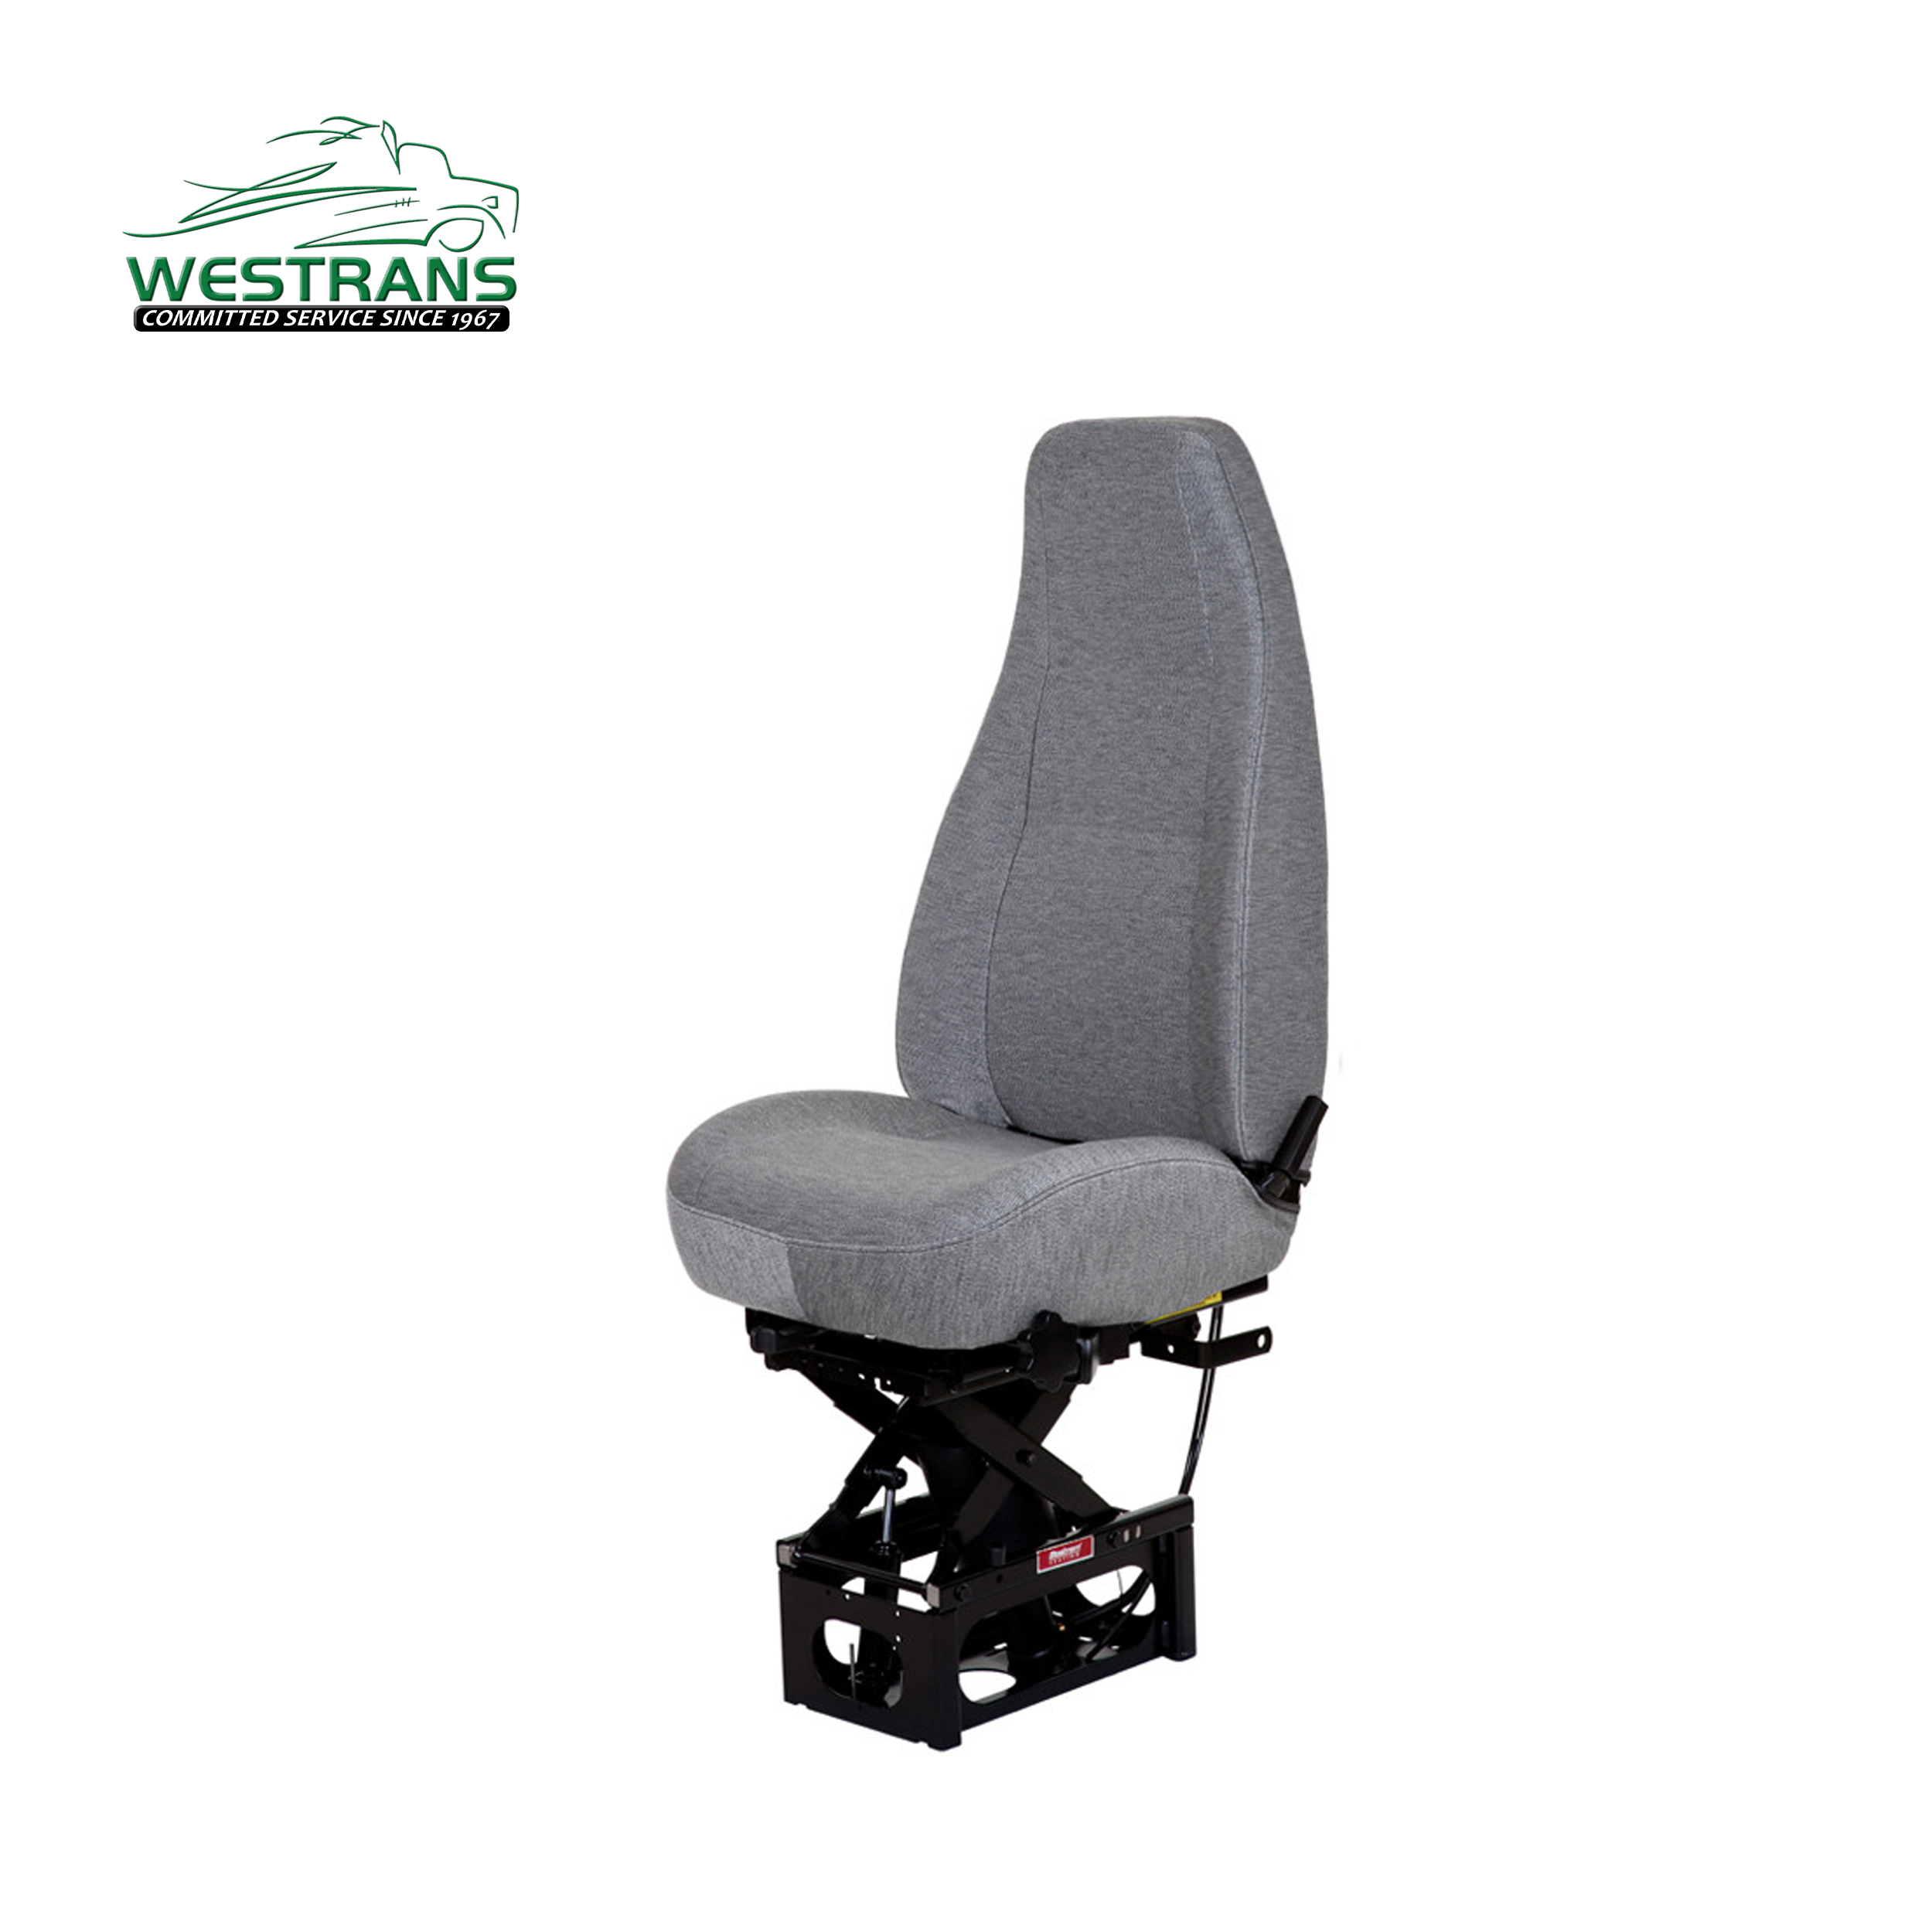 NEW ARRIVALS 2339254-550 Bostrom T-series Seat